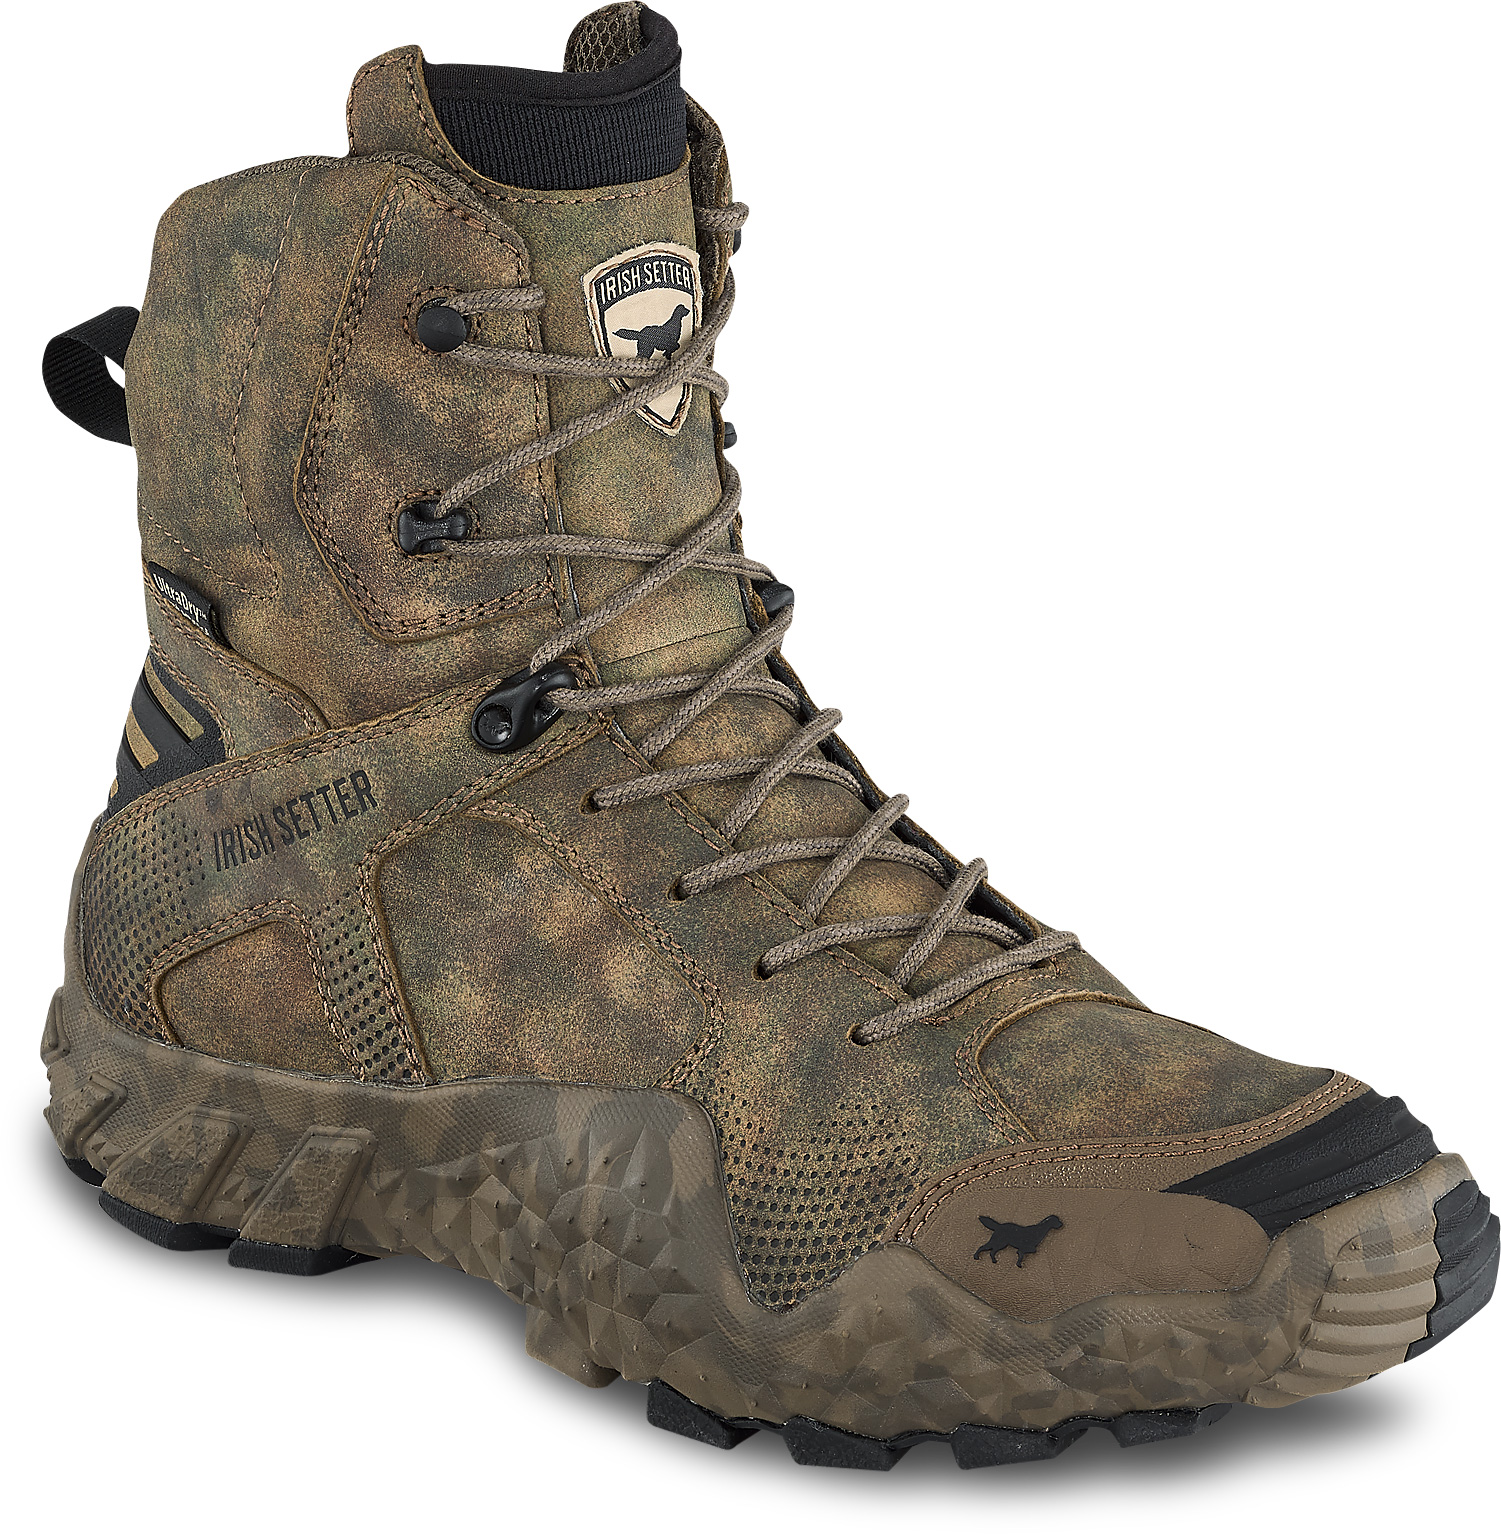 Irish Setter VaprTrek 2815 Hunting Boots - Men's | Up to 10% Off w/ Free SH